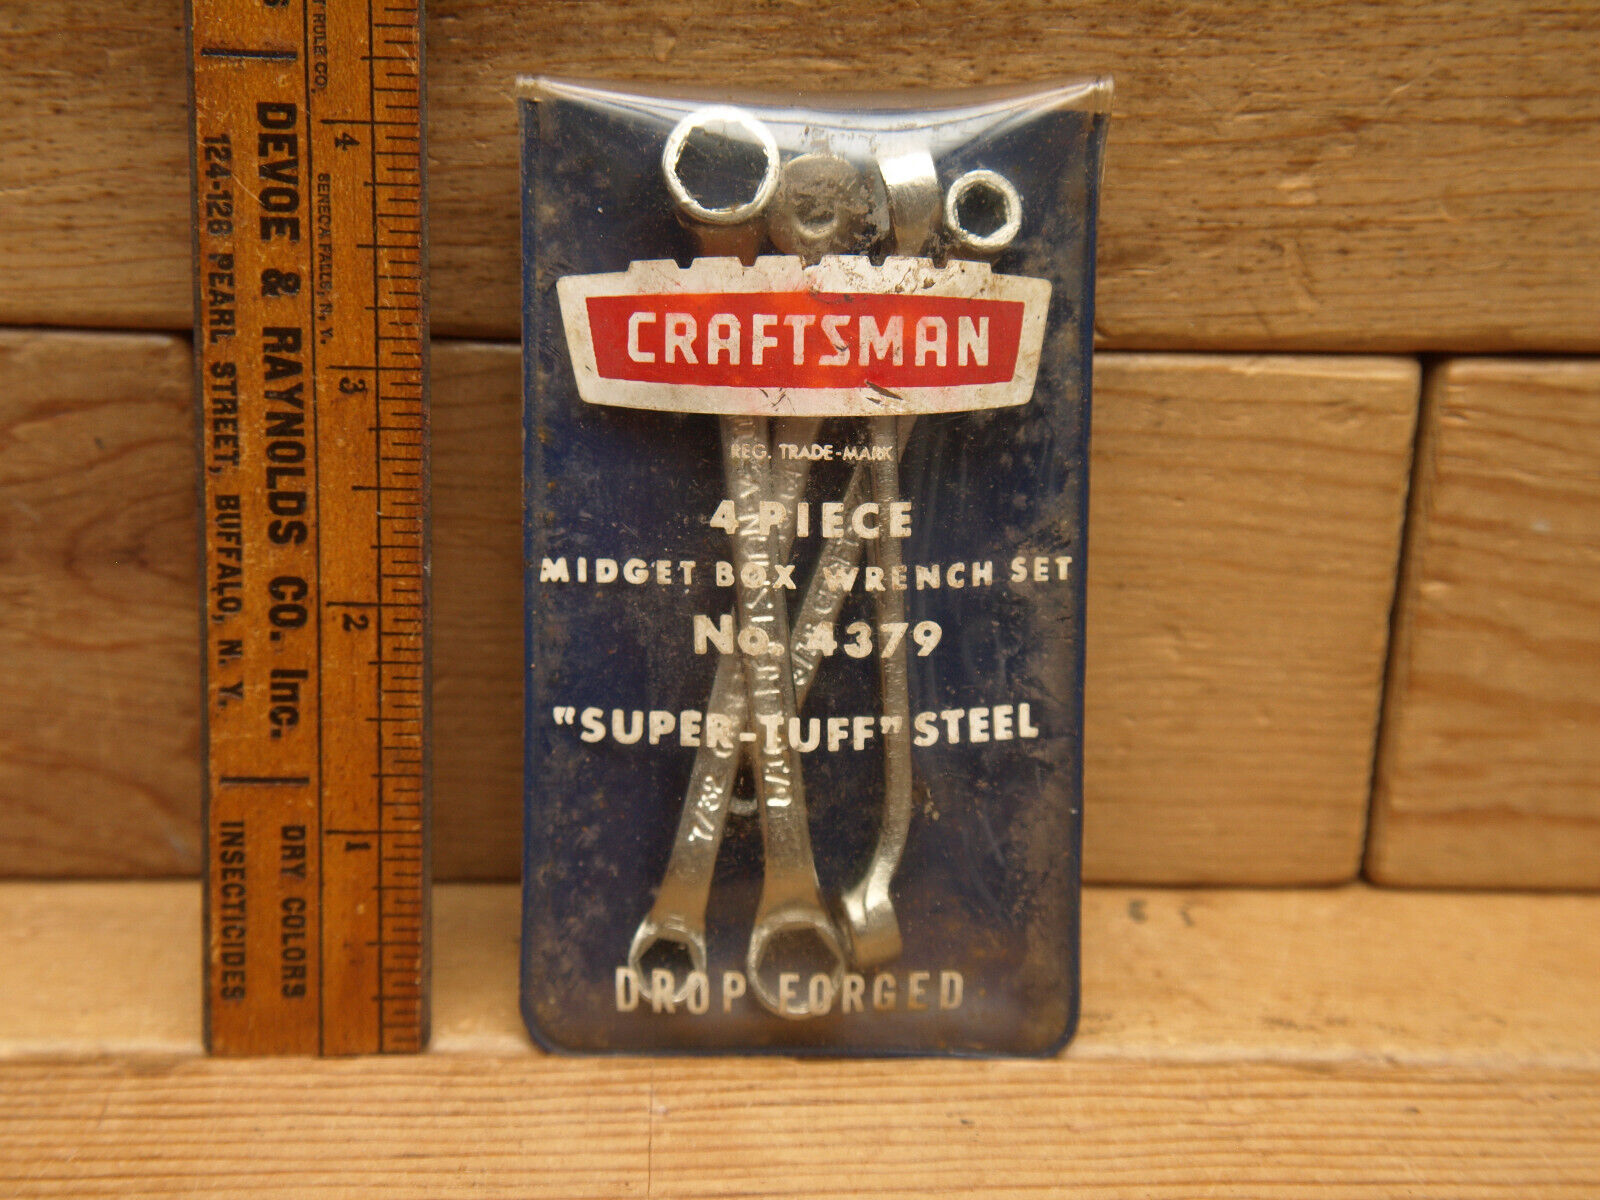 Craftsman 4379 4 Piece Midget Box Wrench Set -V- 1960s